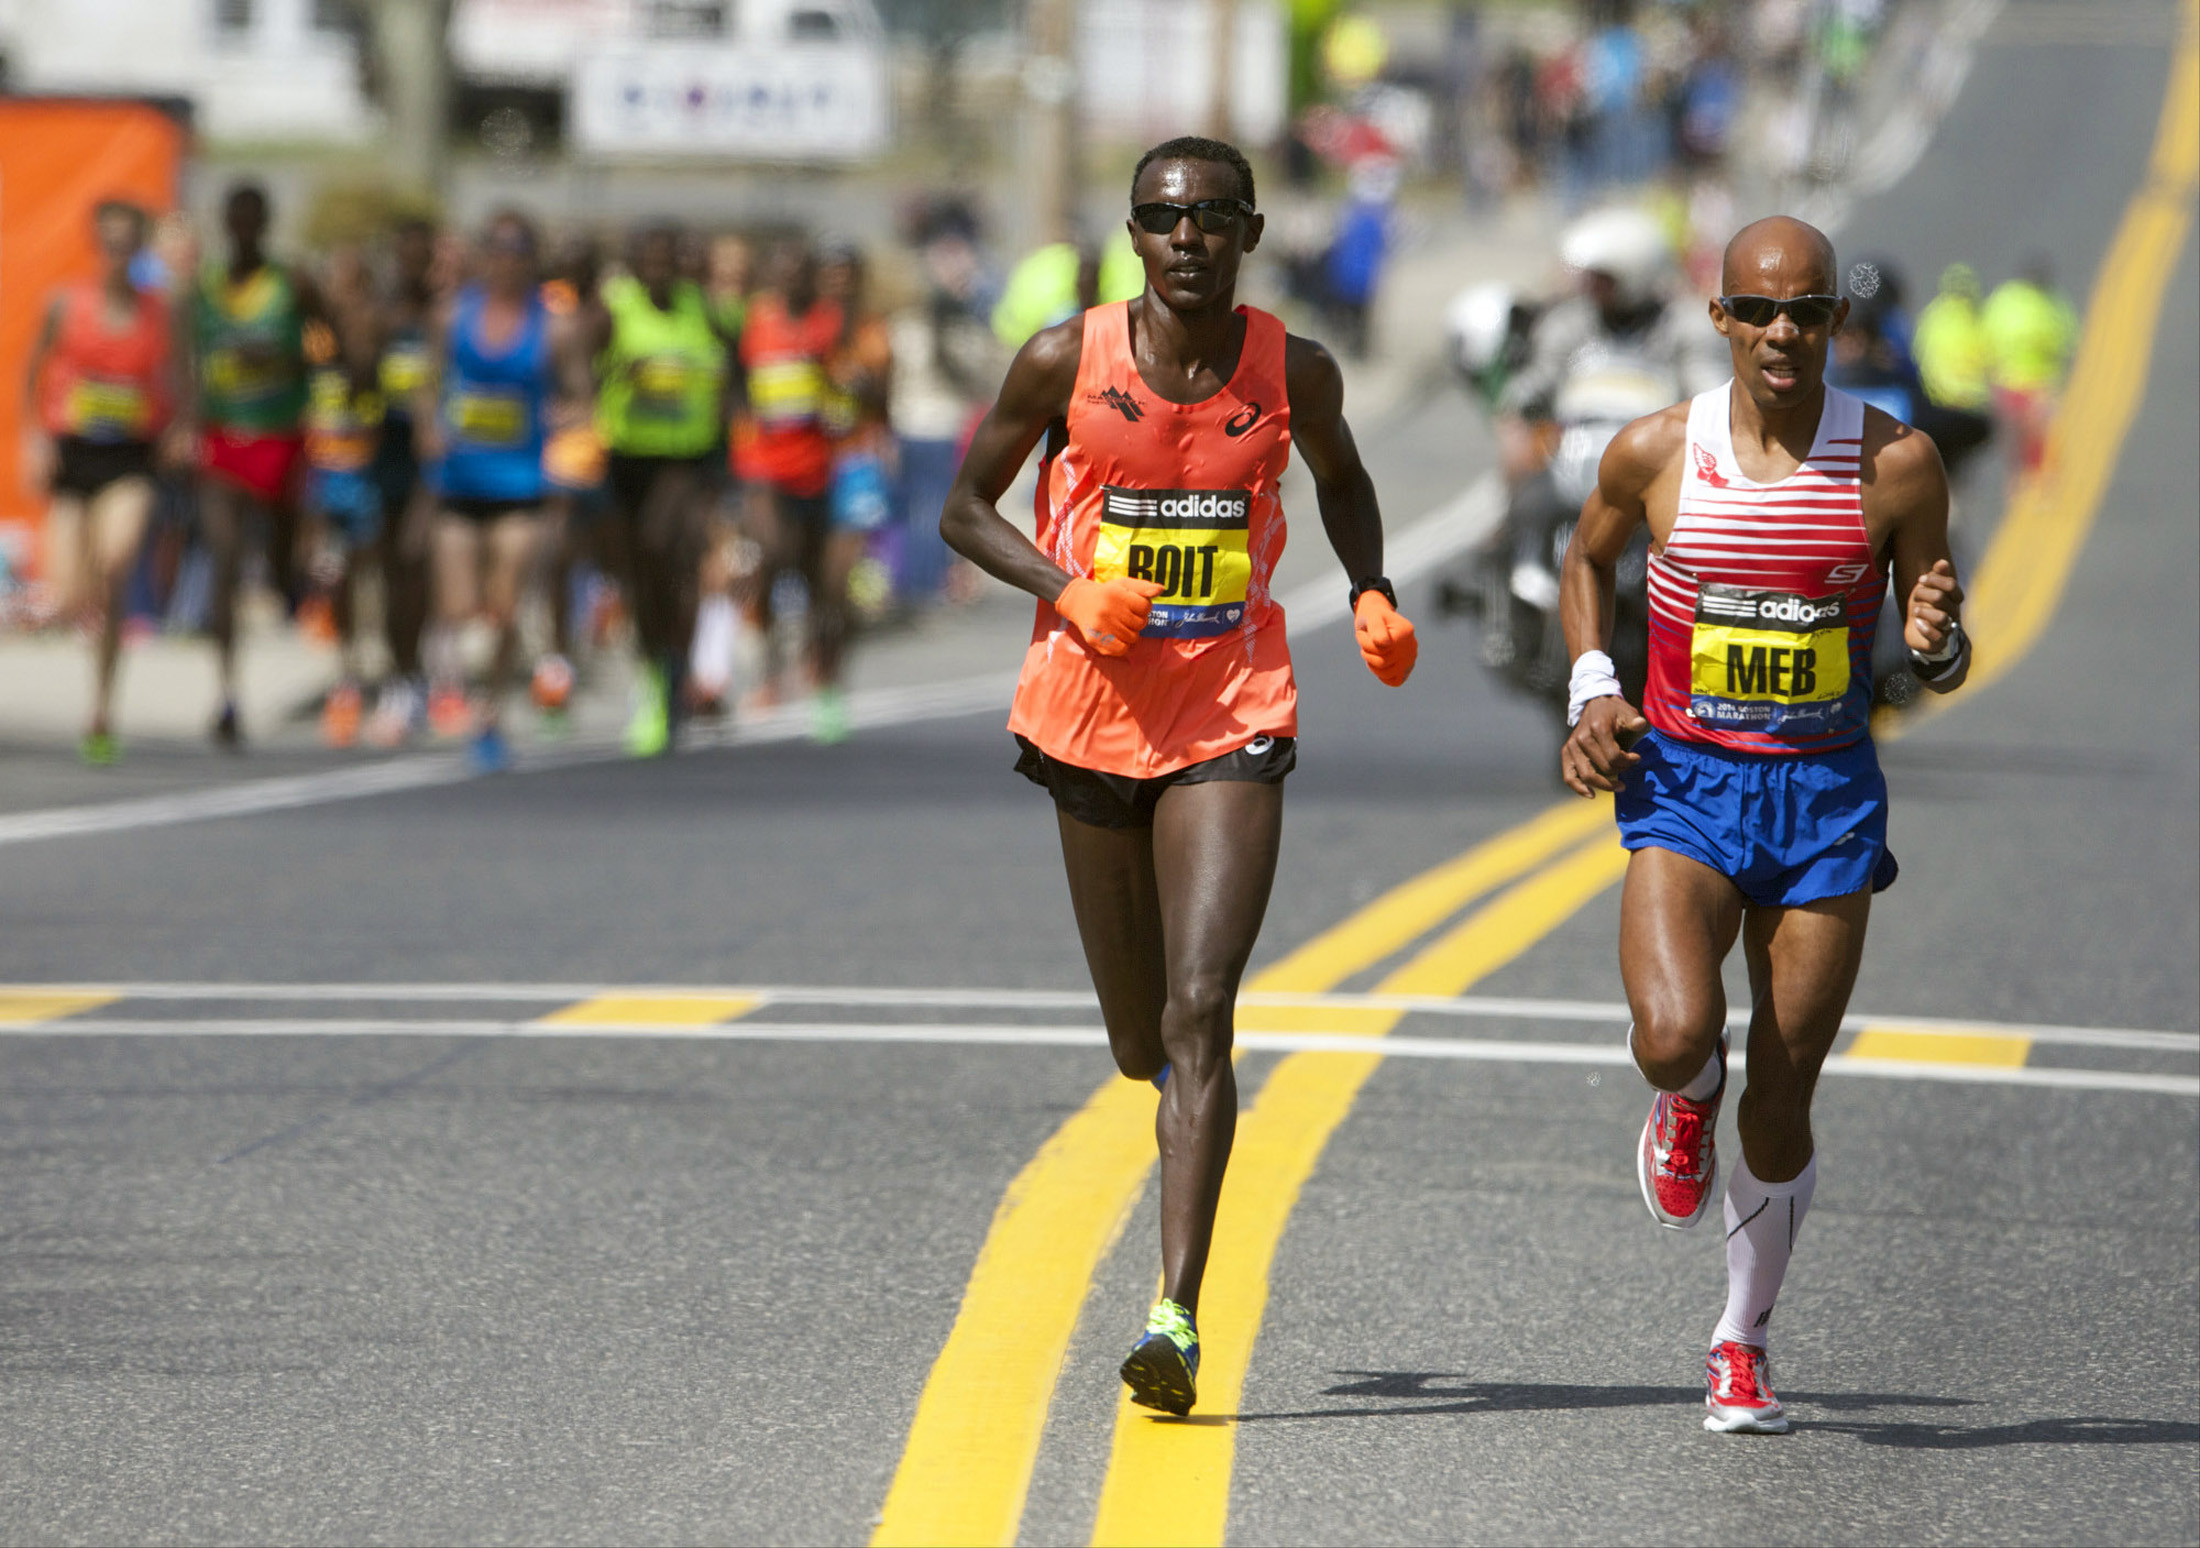 2200x1548 Apr 21, 2014; Boston, MA, USA; Elite runners Josphat Boit (